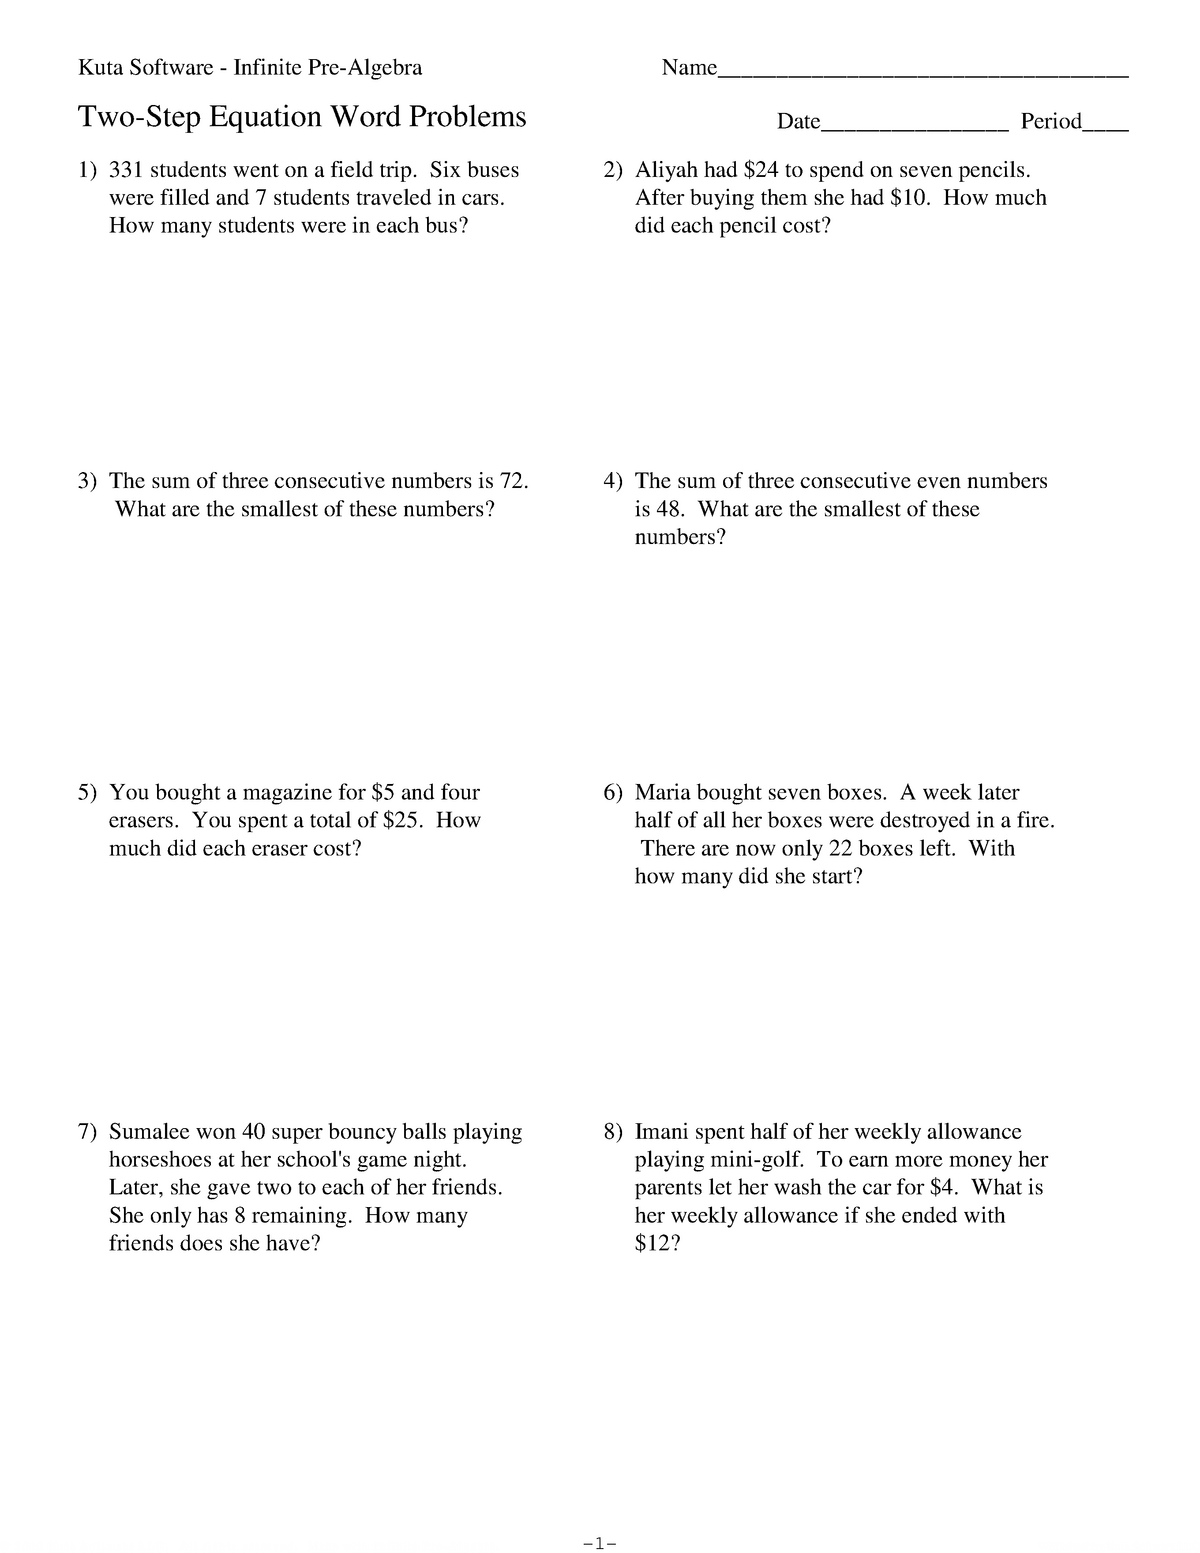 Two-Step Word Problems - 22 - Math - Yorku - StuDocu Within Algebra 2 Word Problems Worksheet